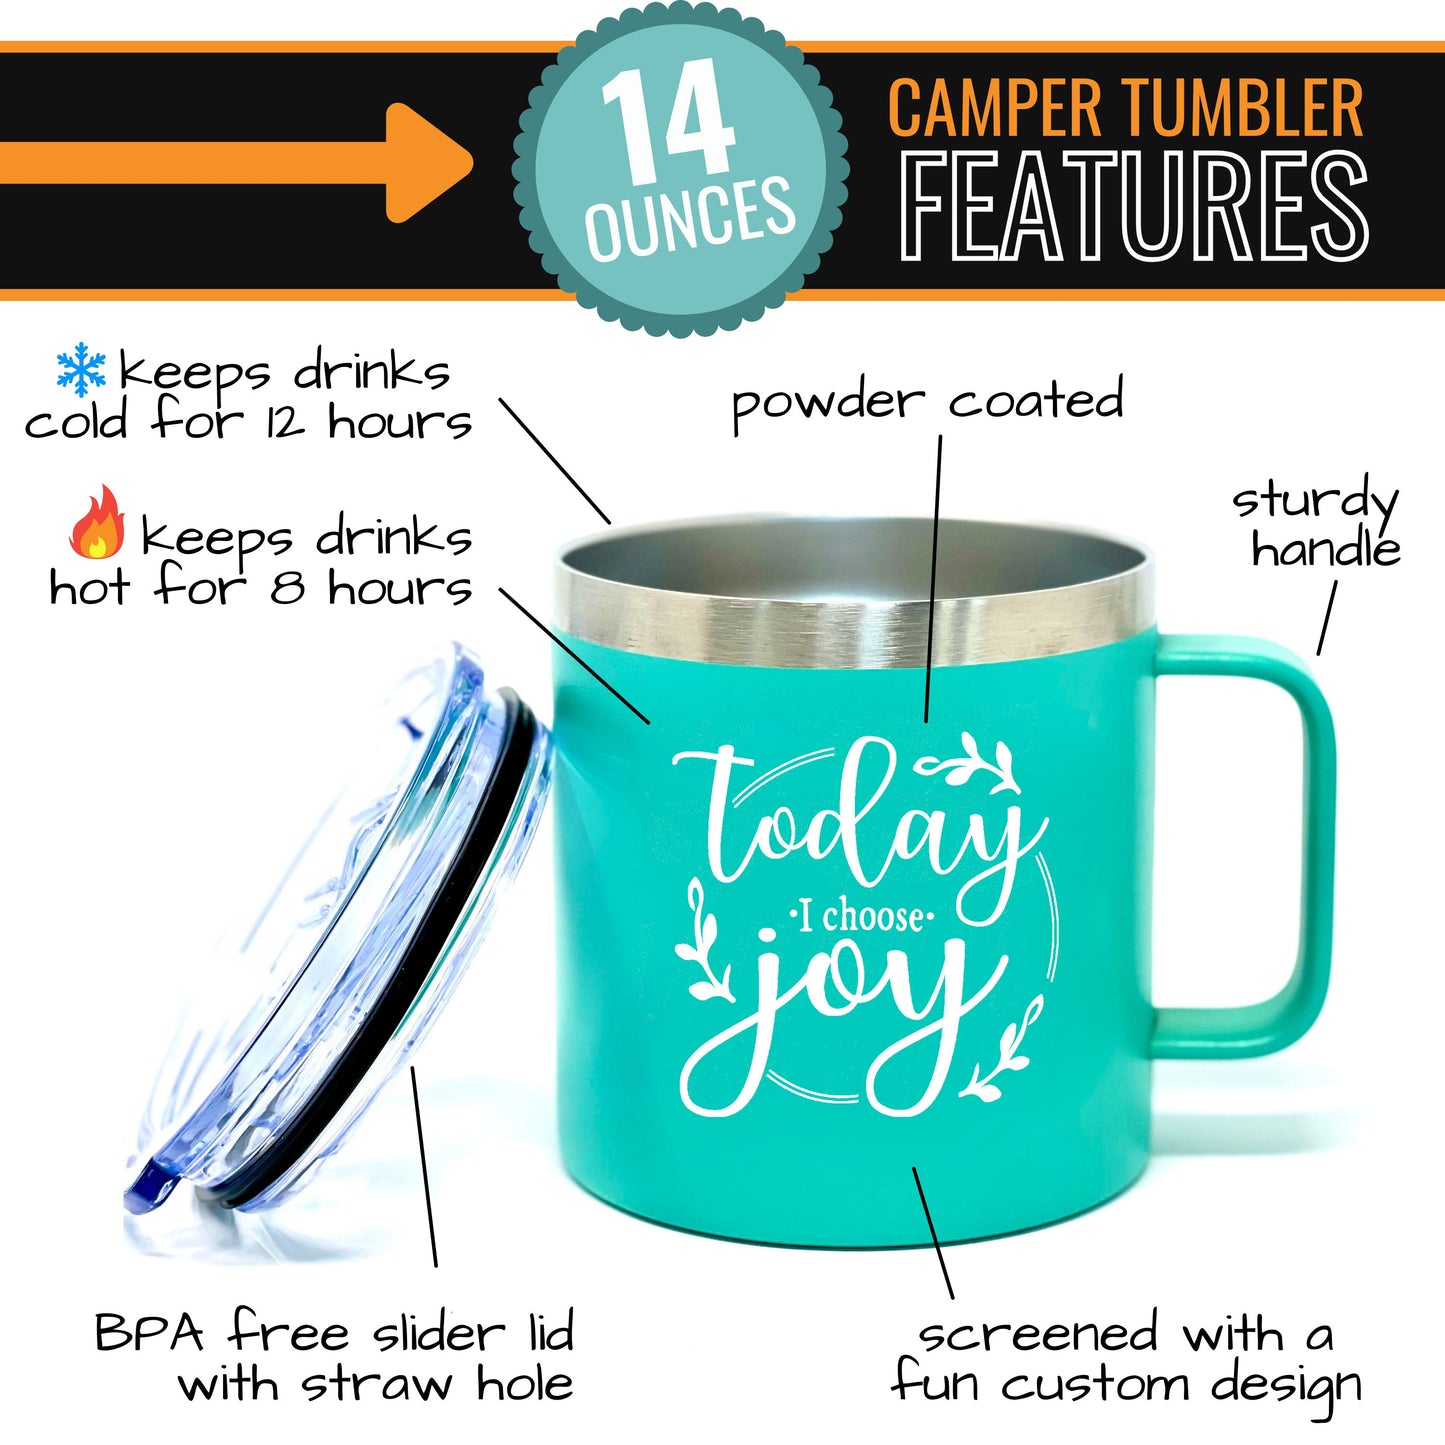 Choose Joy 14 oz Teal Camper Tumbler - Outlet Deals Texas